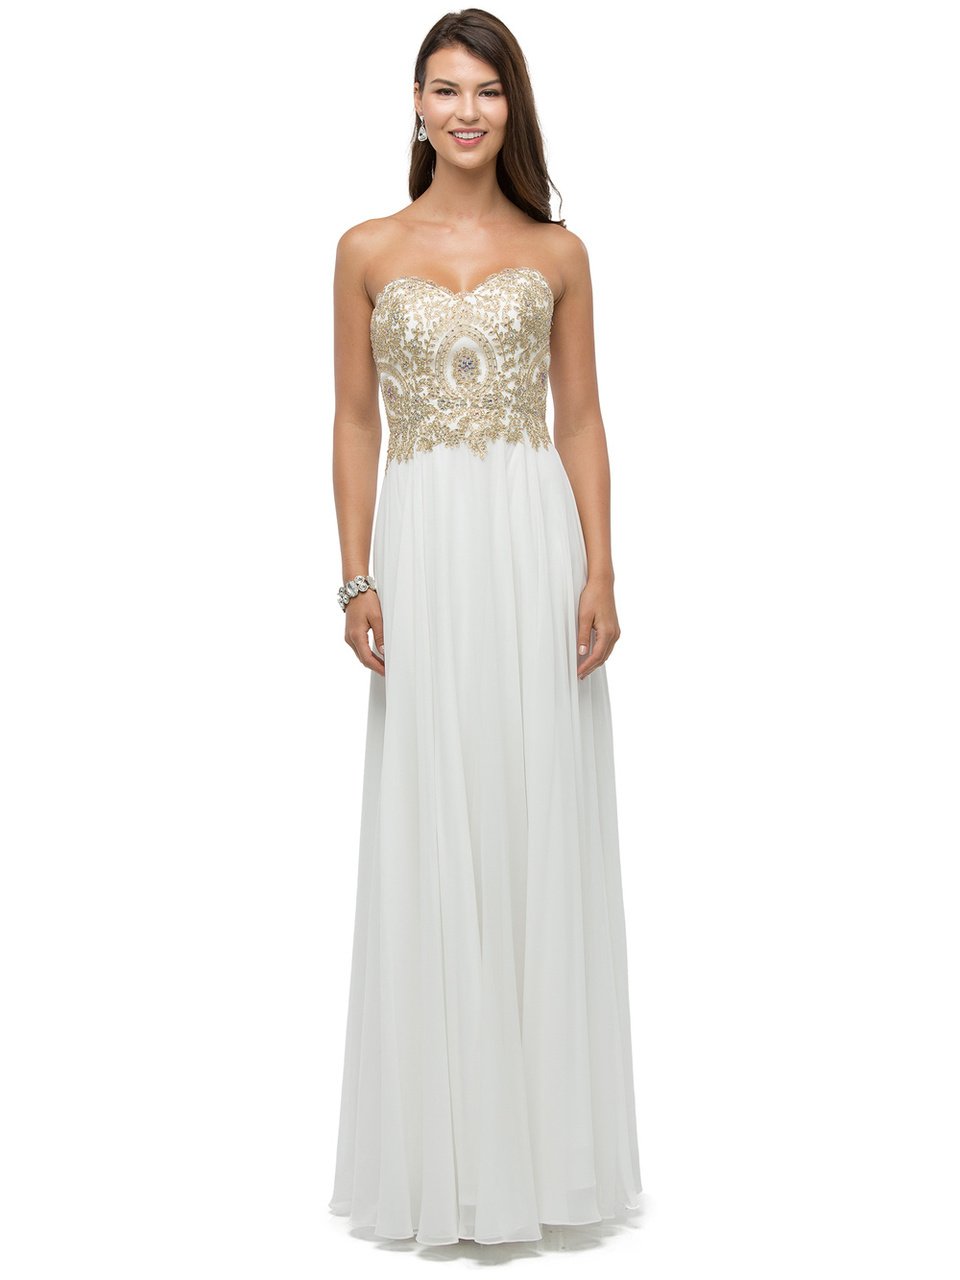 Dancing Queen Bridal - 9502 Stunning Bead Encrusted Sweetheart Chiffon Ball Gown
